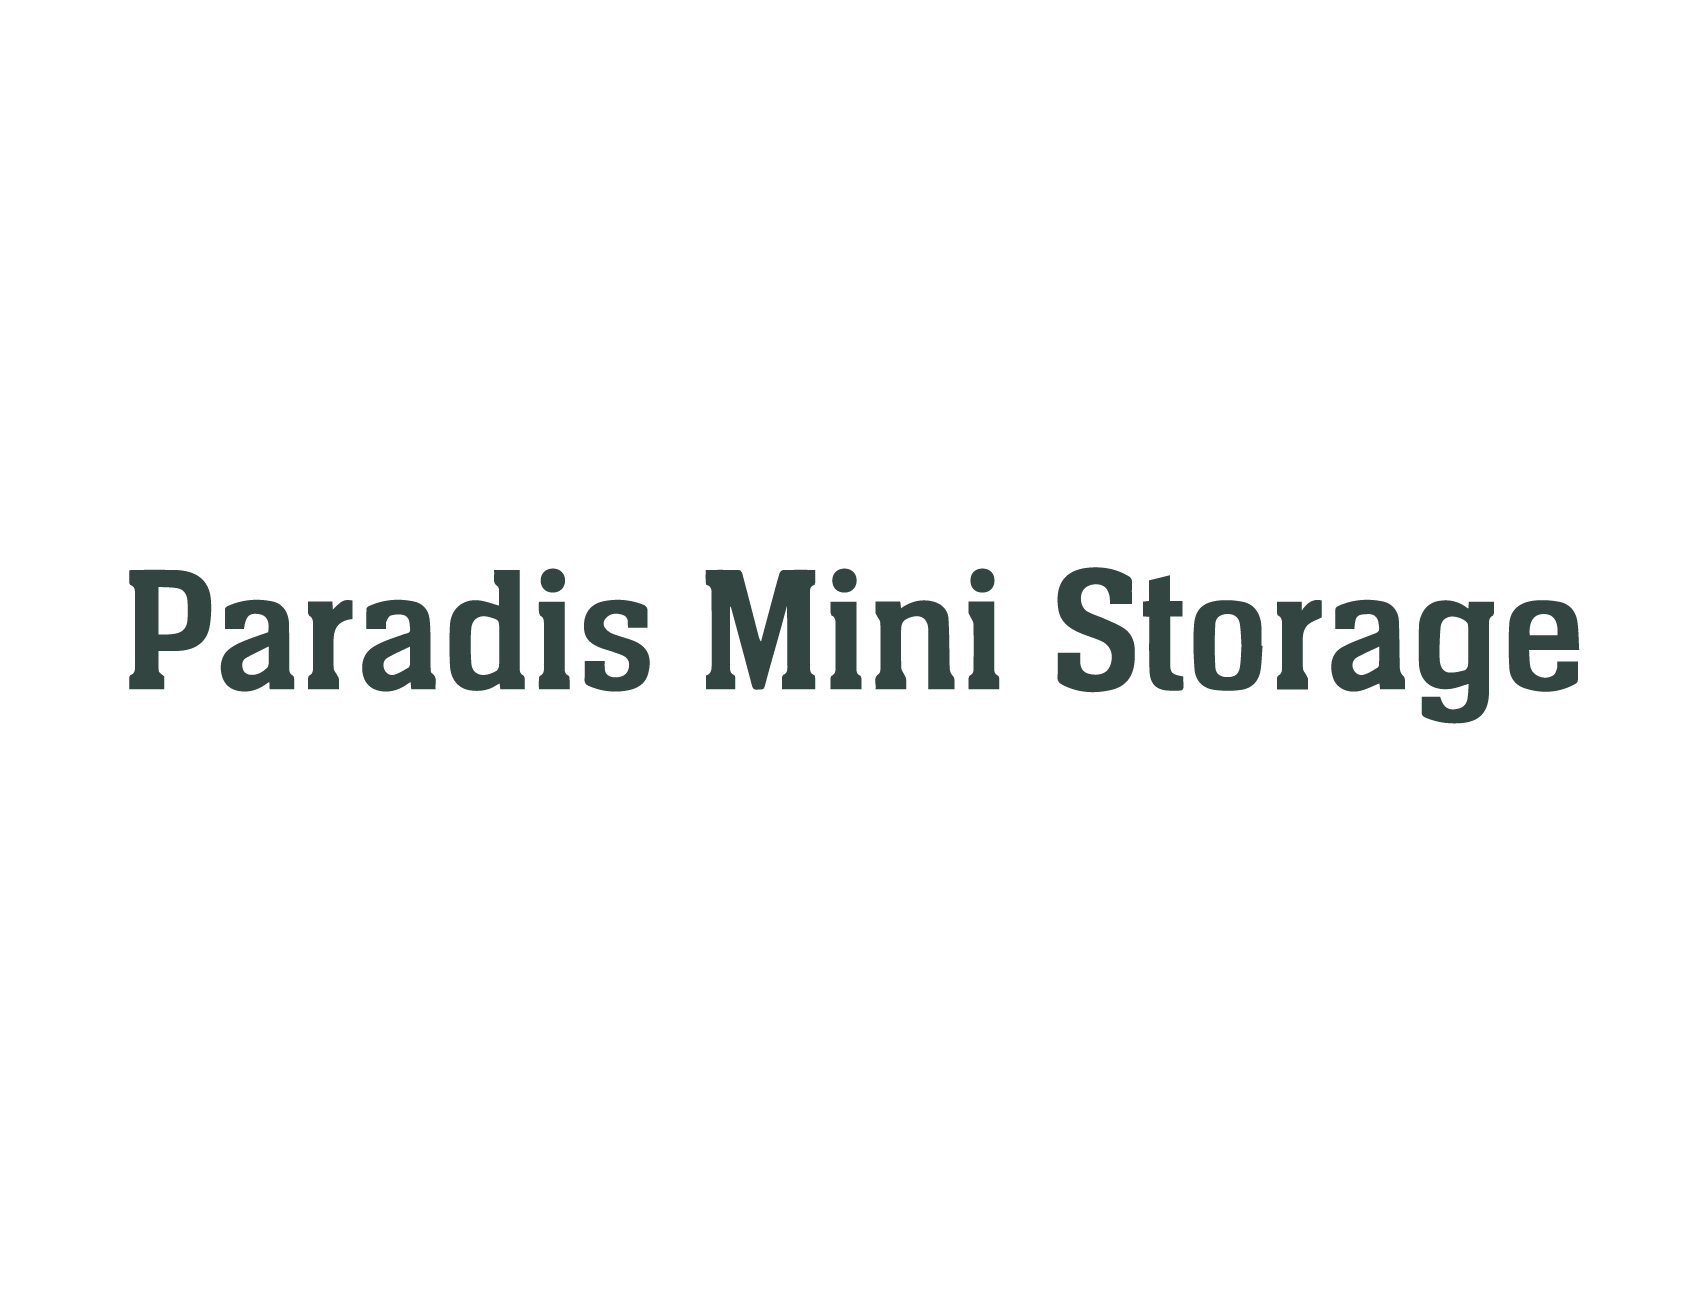 Paradis Mini Storage